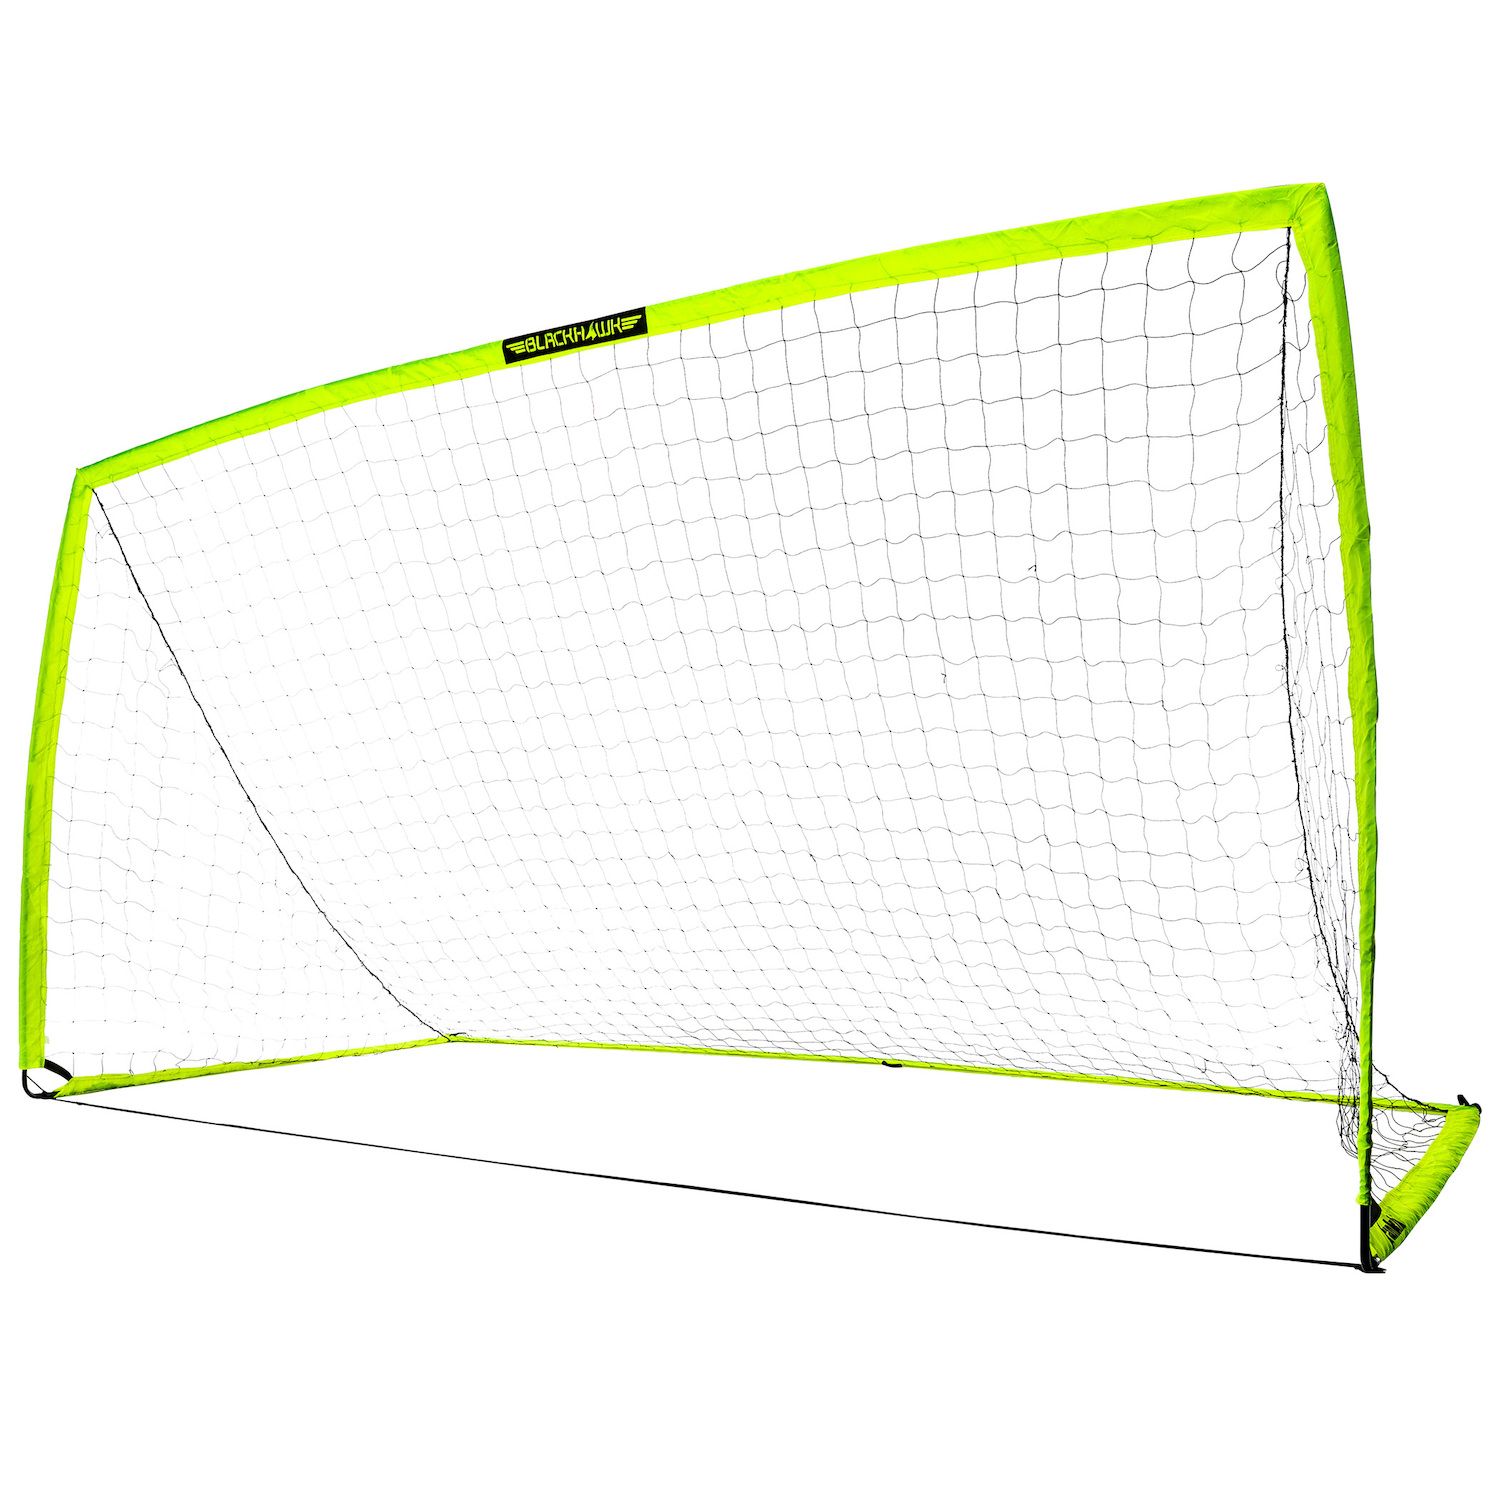 HART Pro Target Sports Goal, PVC Soccer Goals